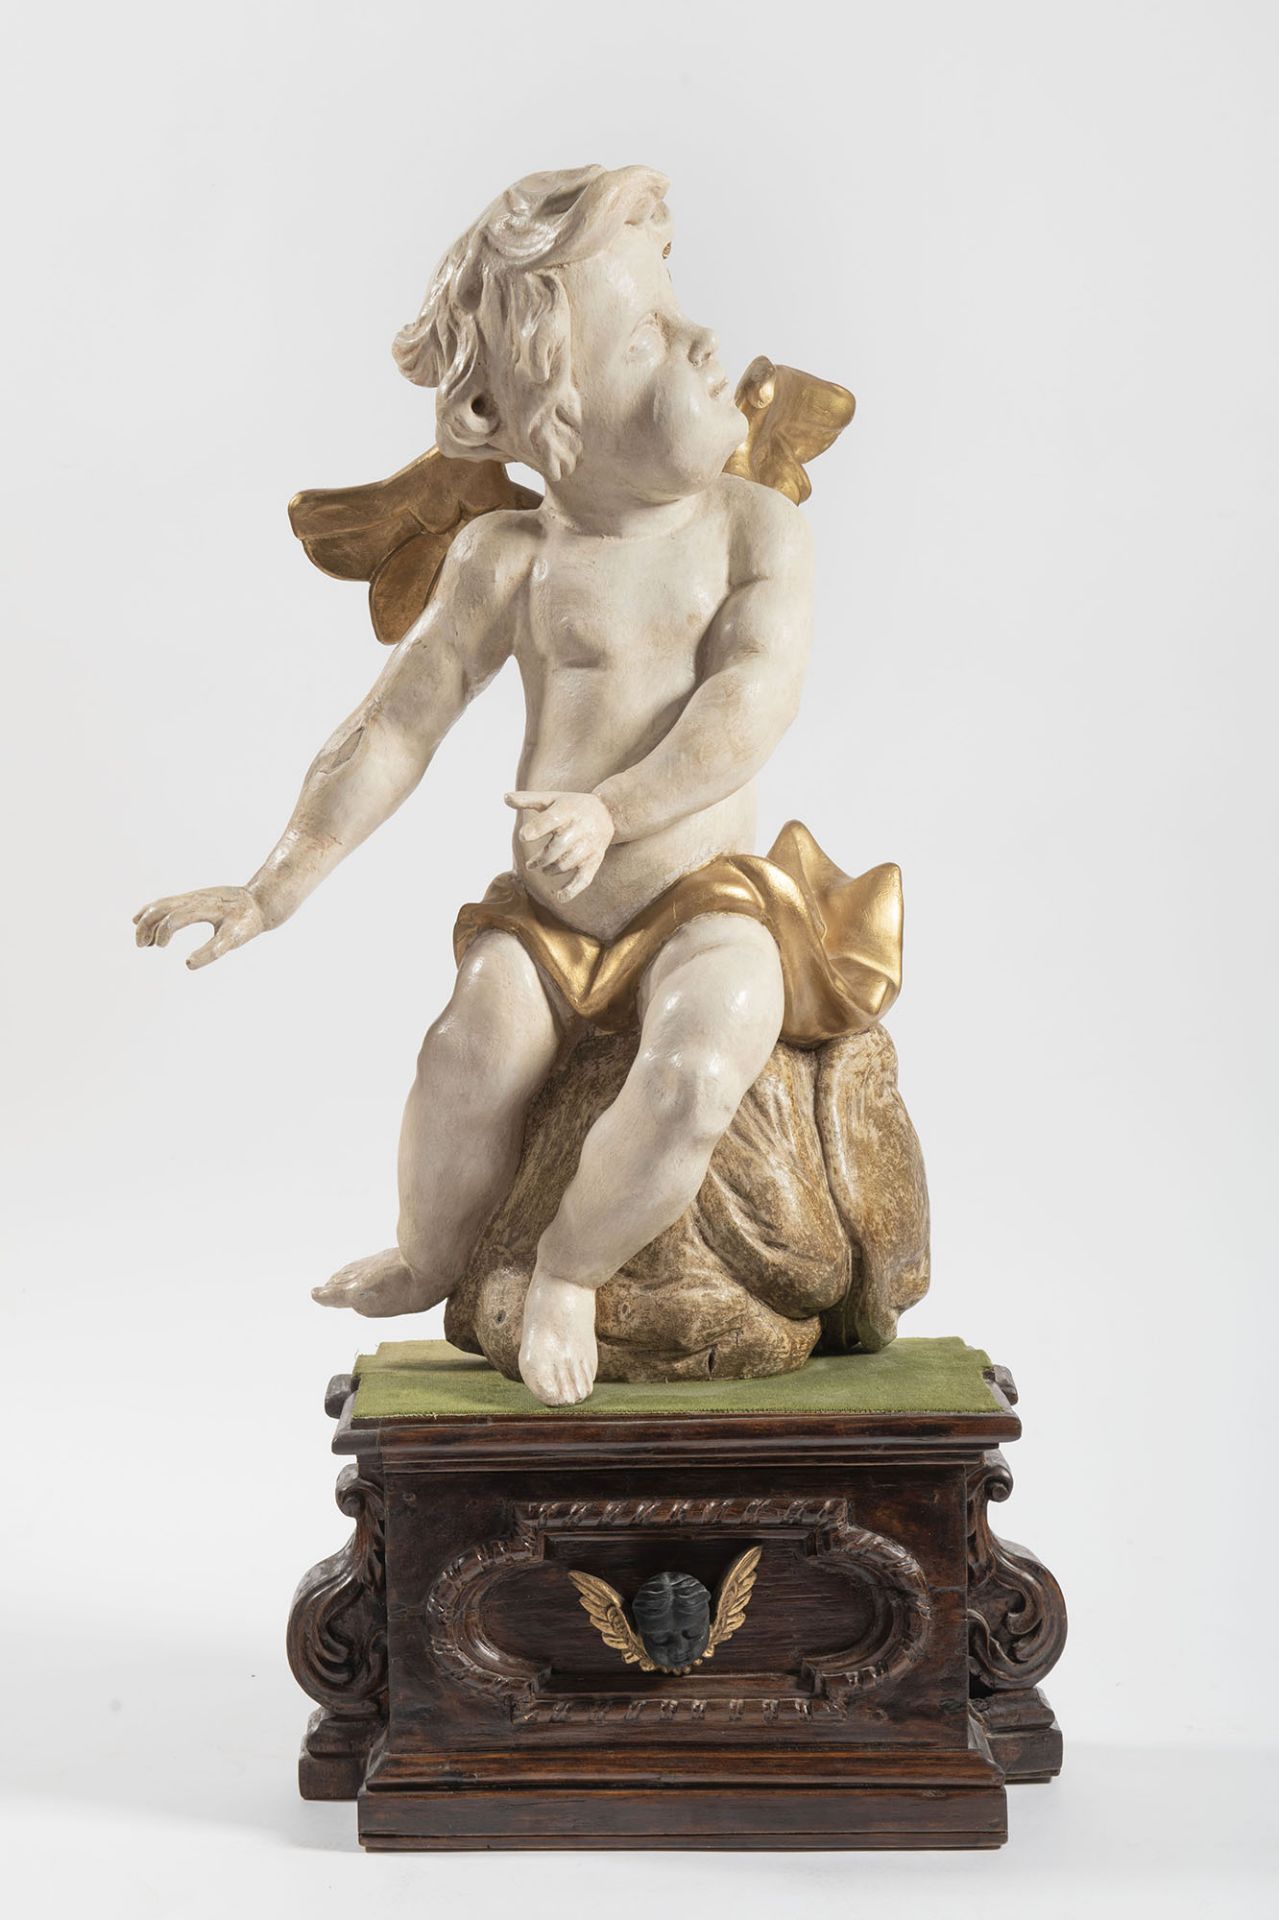 Putto on Cloud Pedestal, 18th century